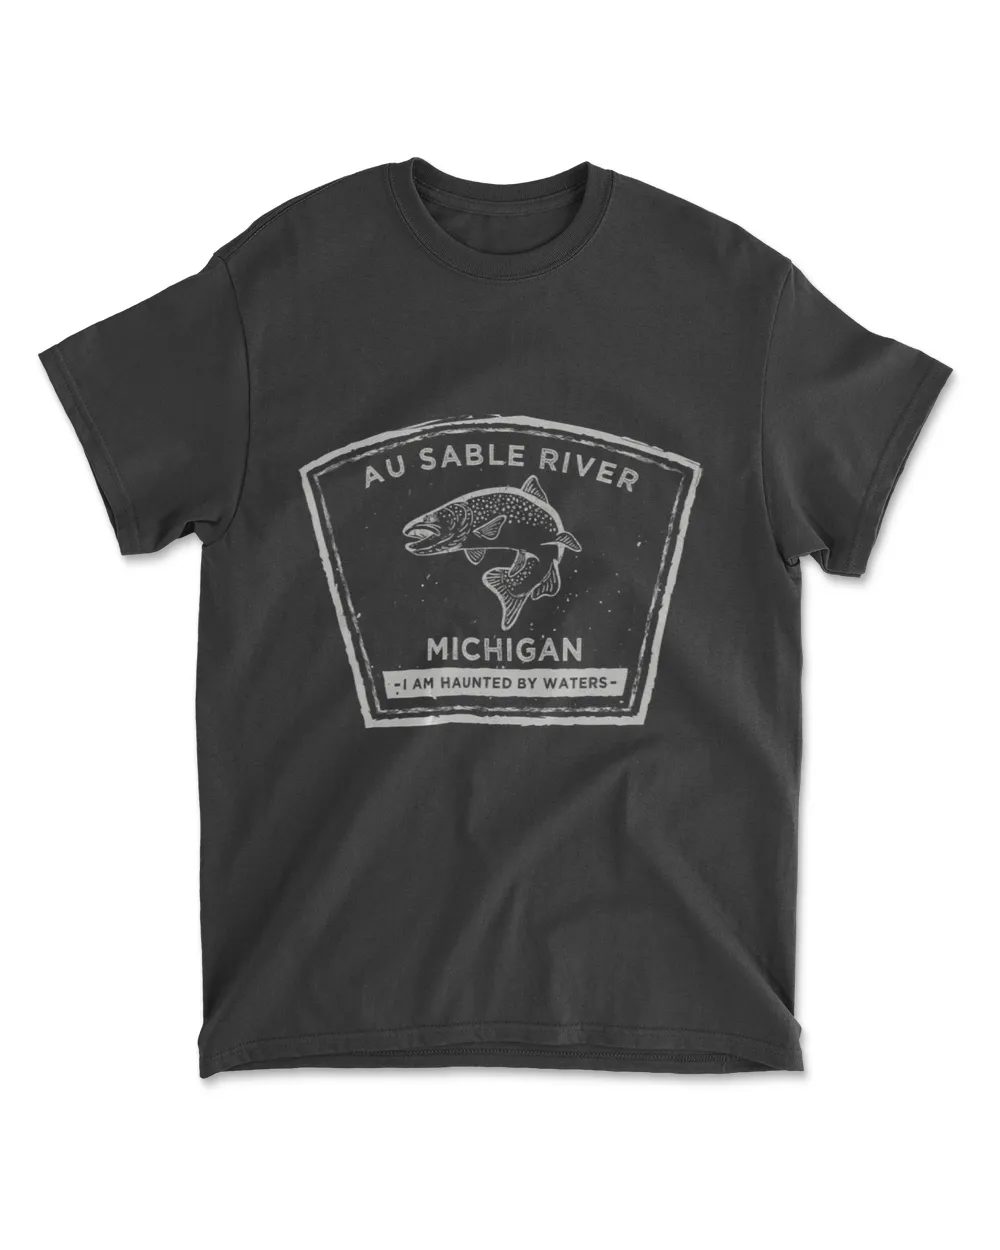 Au Sable River Michigan Fly Fishing T-Shirt